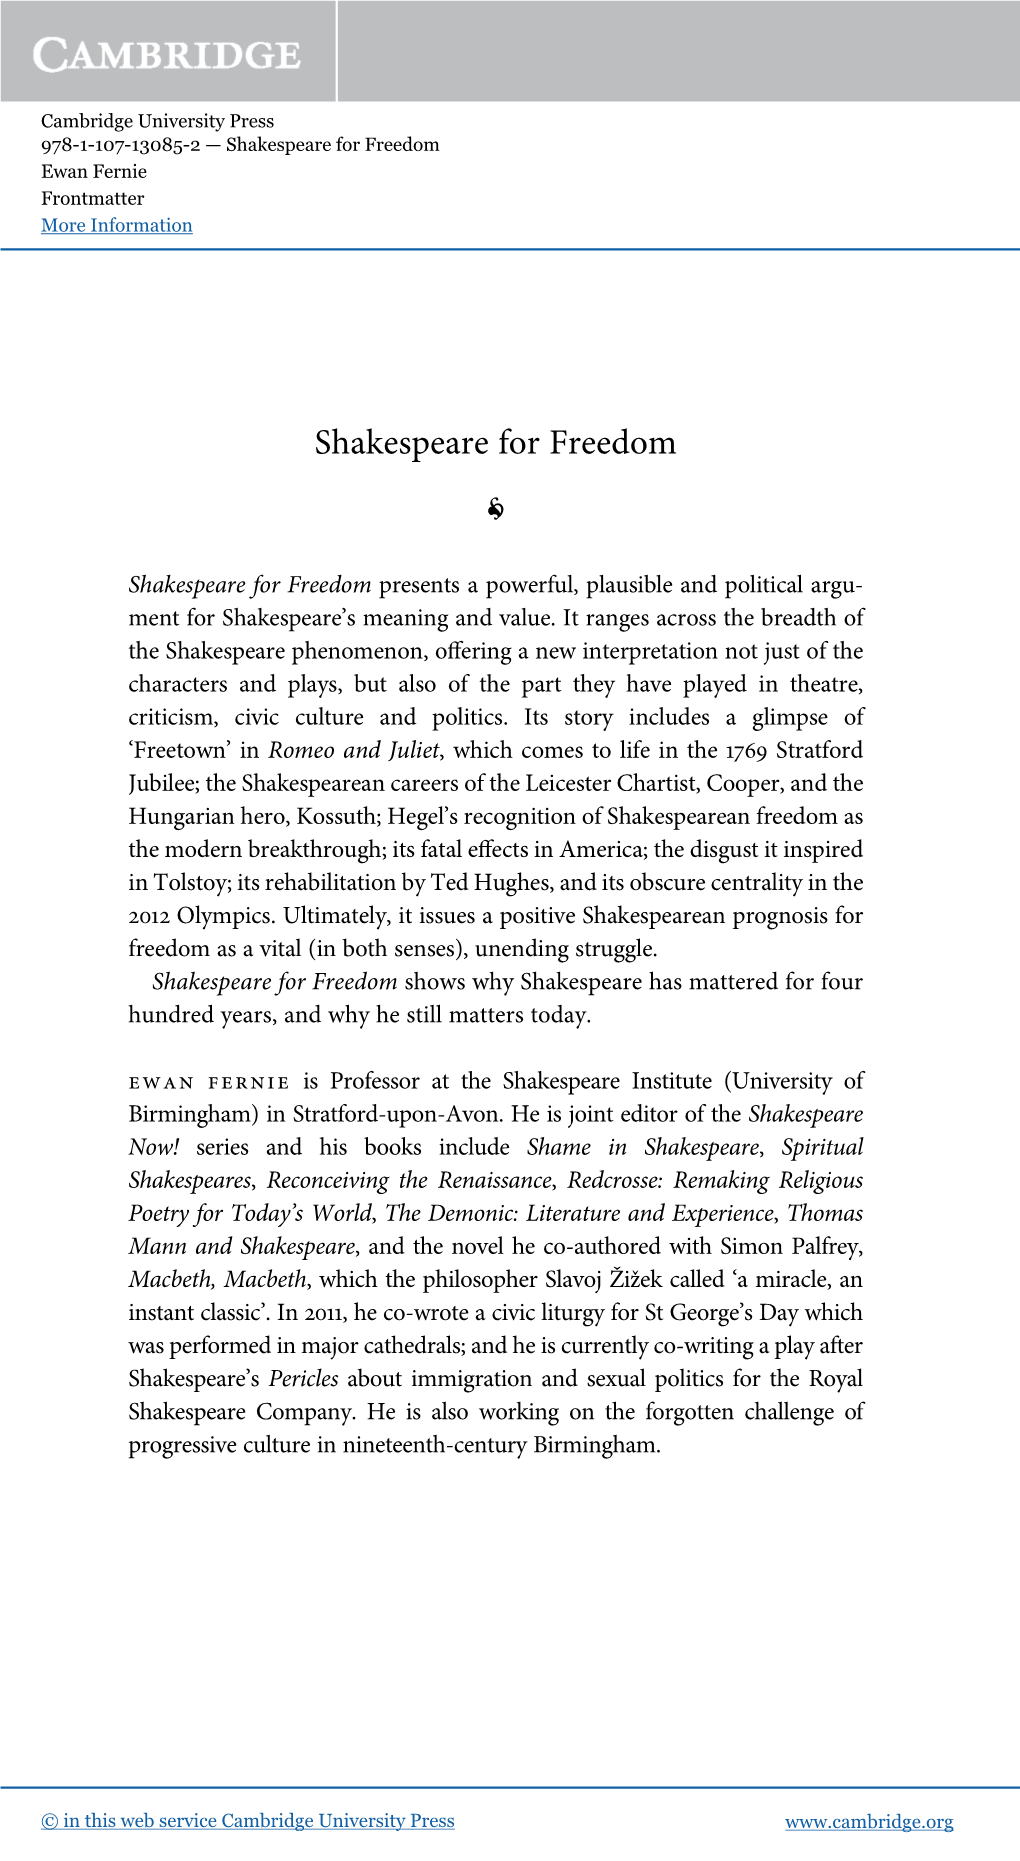 Shakespeare for Freedom Ewan Fernie Frontmatter More Information